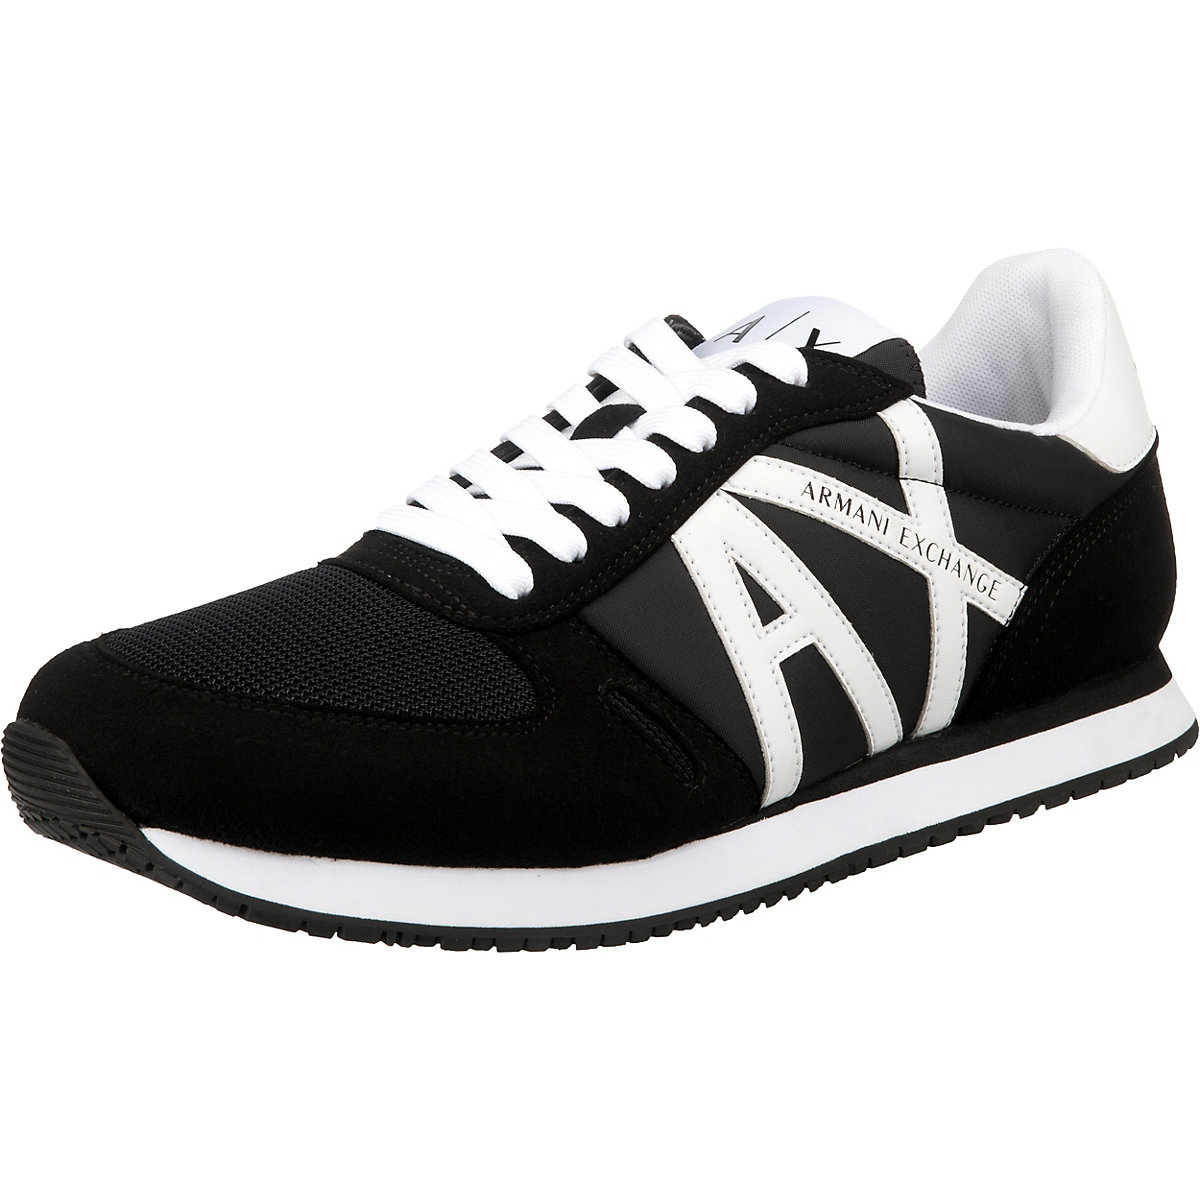 ARMANI EXCHANGE Sneakers Low schwarz/weiß